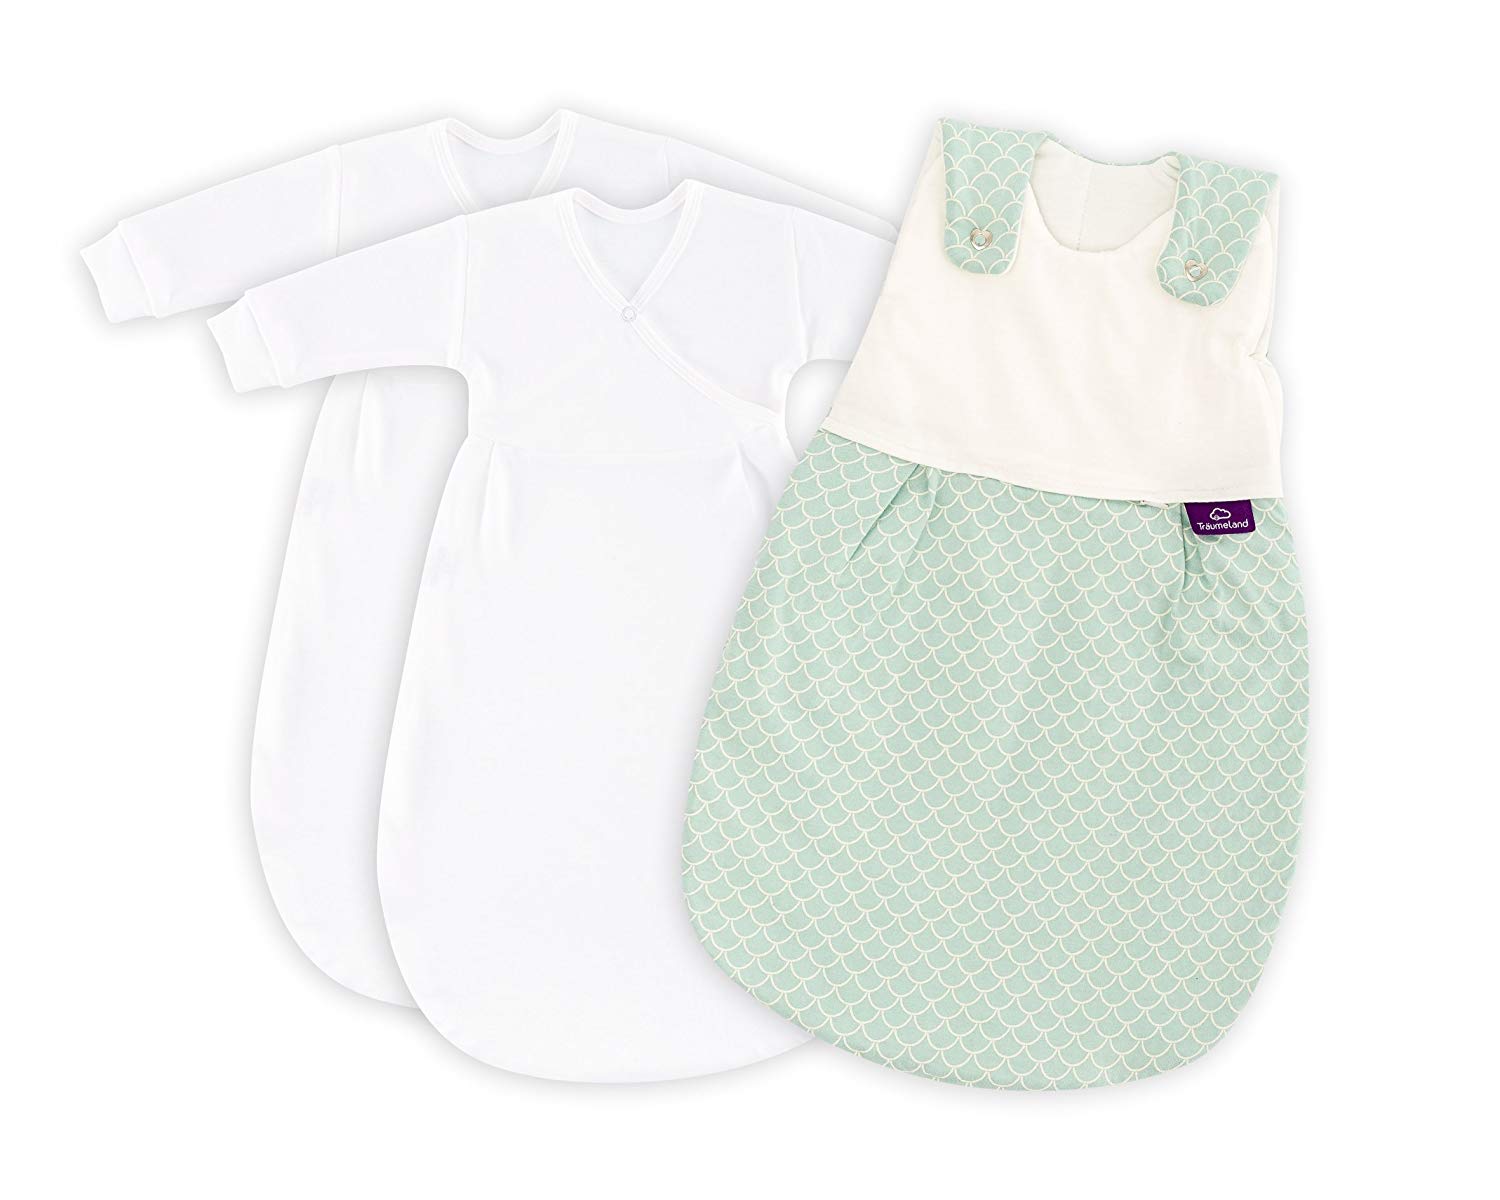 Träumeland S0100855 Baby Sleeping Bag Liebmich 3 Set Dandruff Mint, Size 6 to 9 Months (Multi-Coloured)